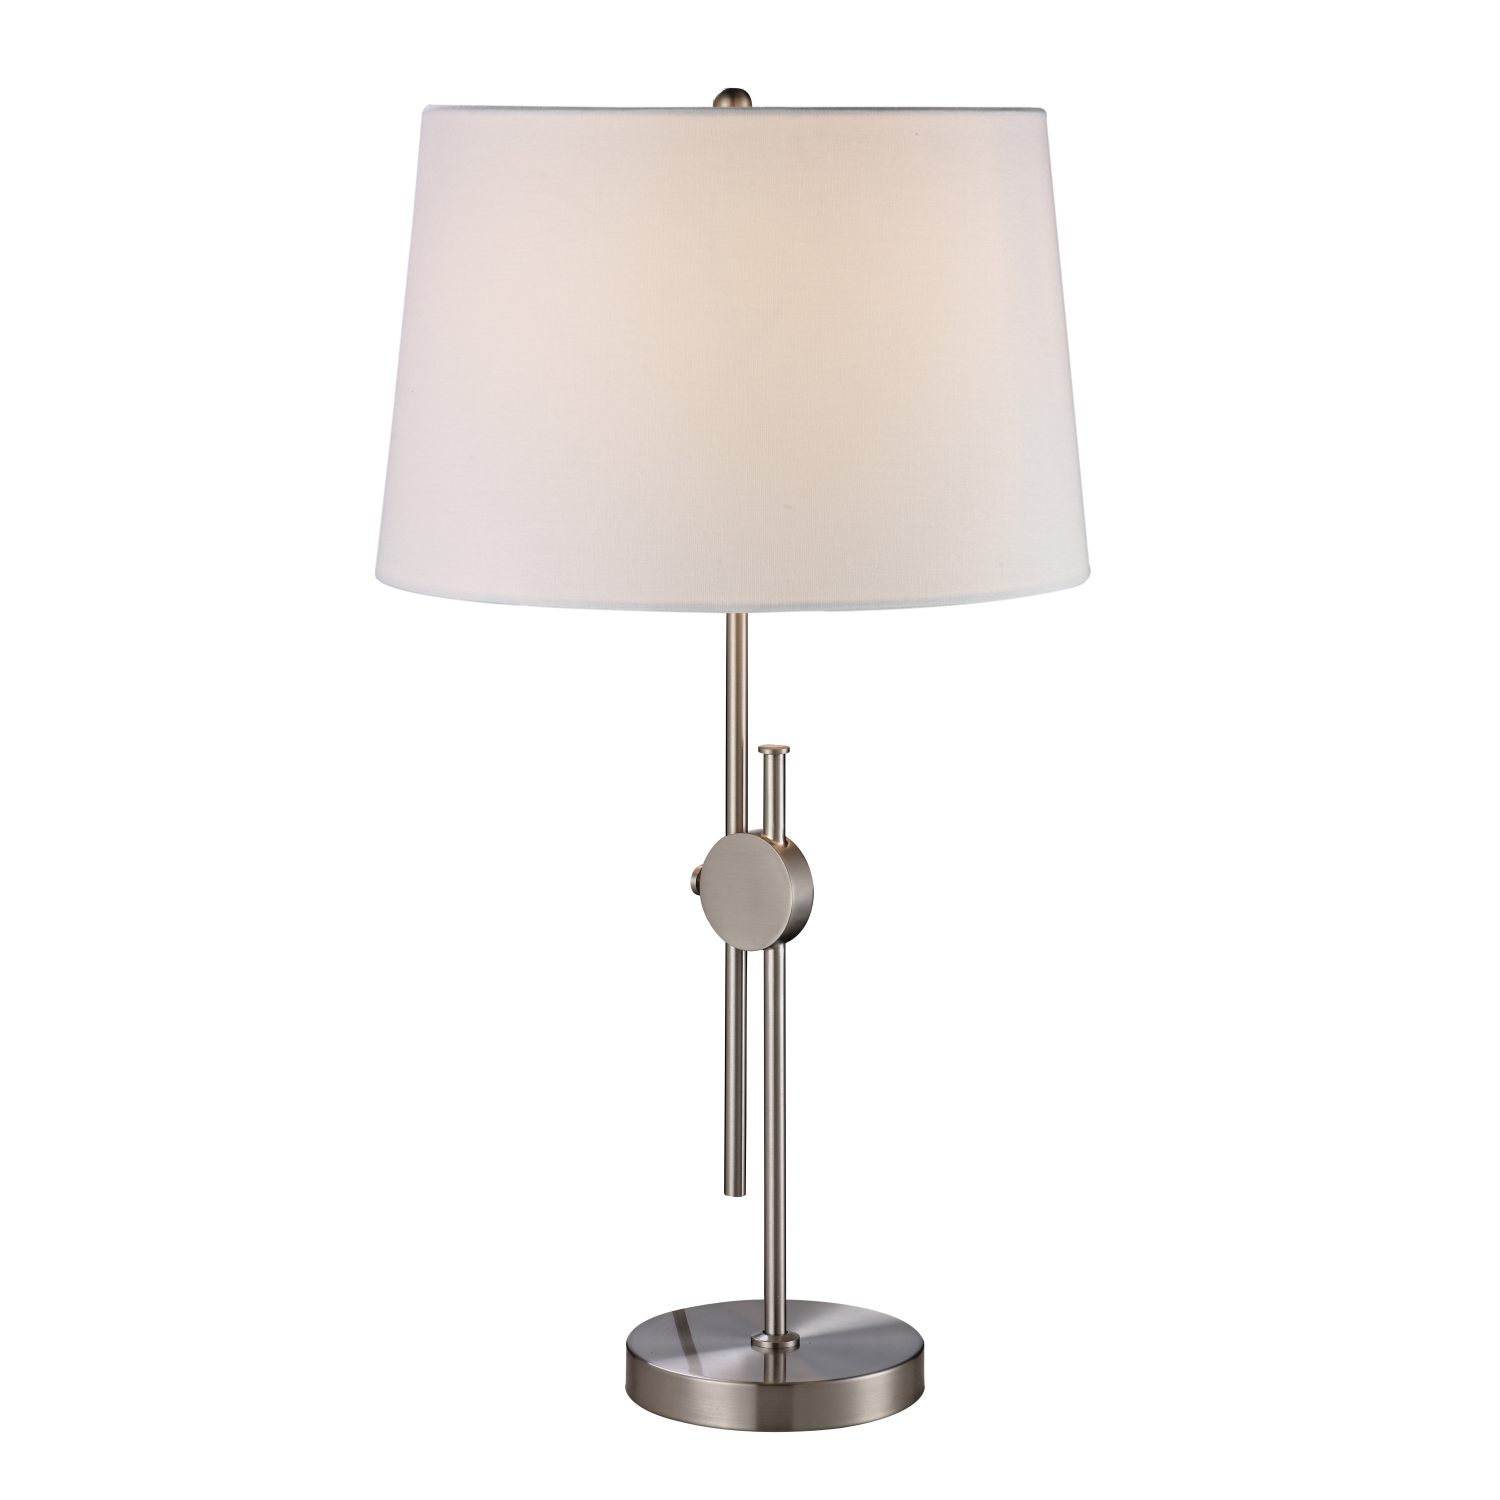 23- 30"H (max) Adjustable Table Lamp Plated Brusehd Steel Finish